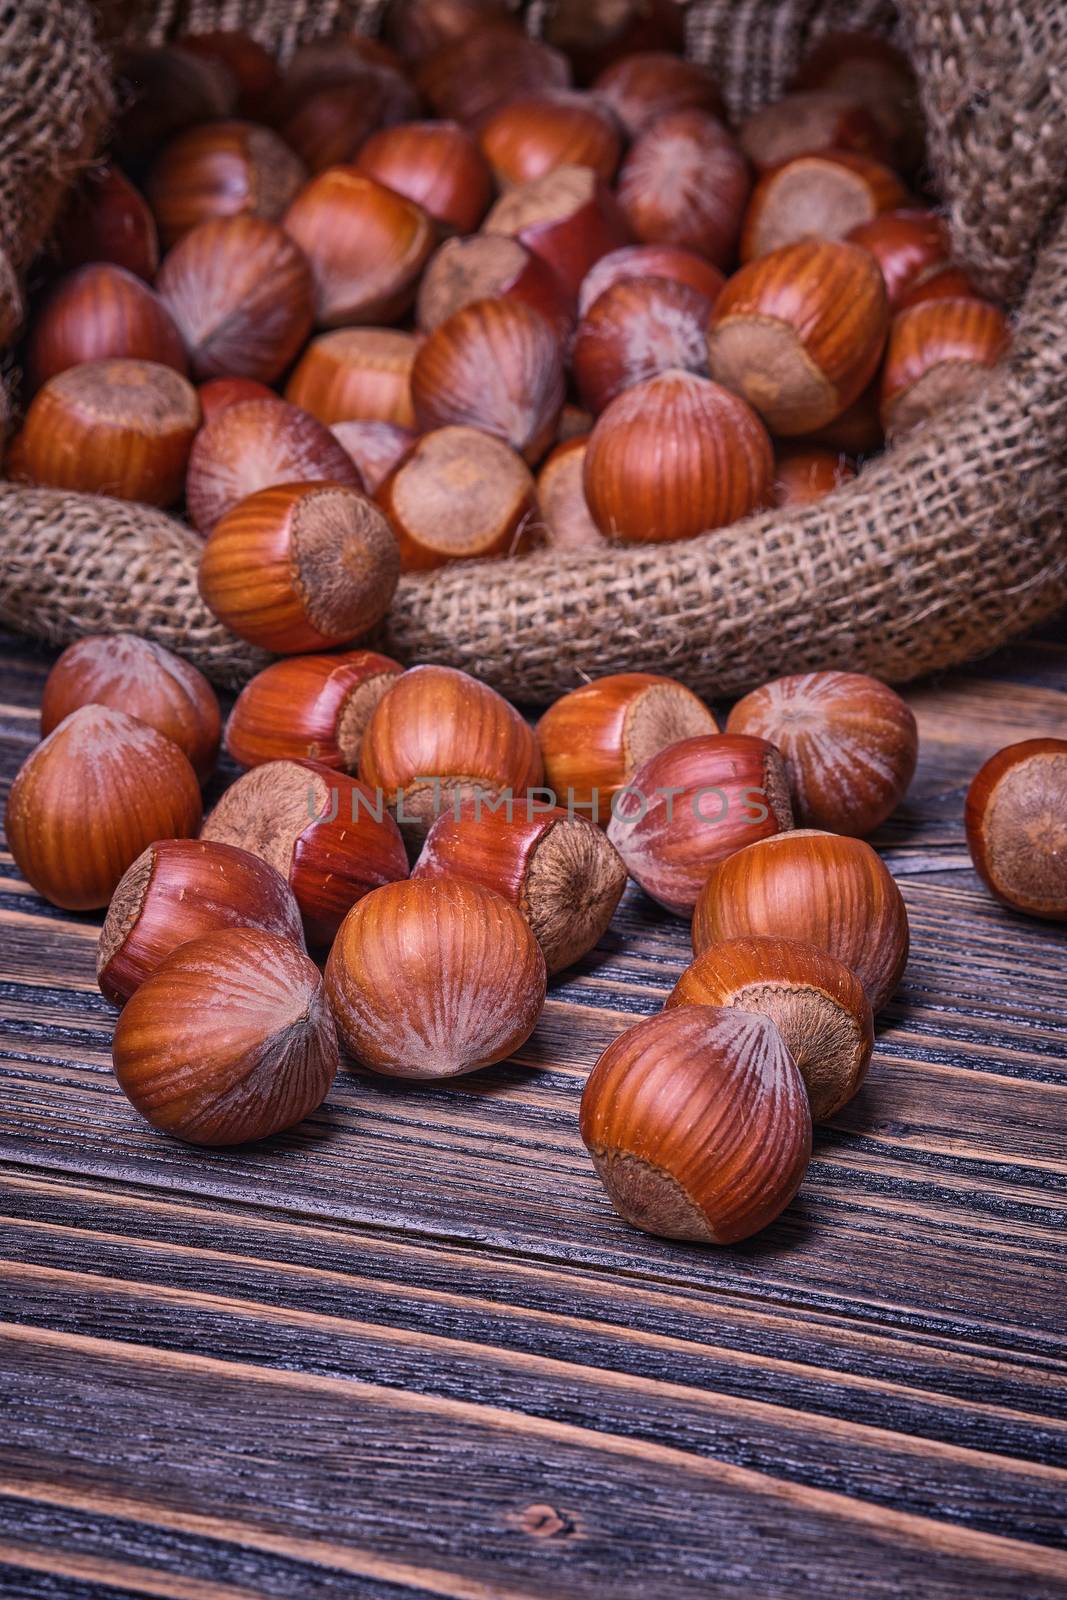 Hazelnuts in bag, vegetarian food in wooden bowls, on old wooden background.